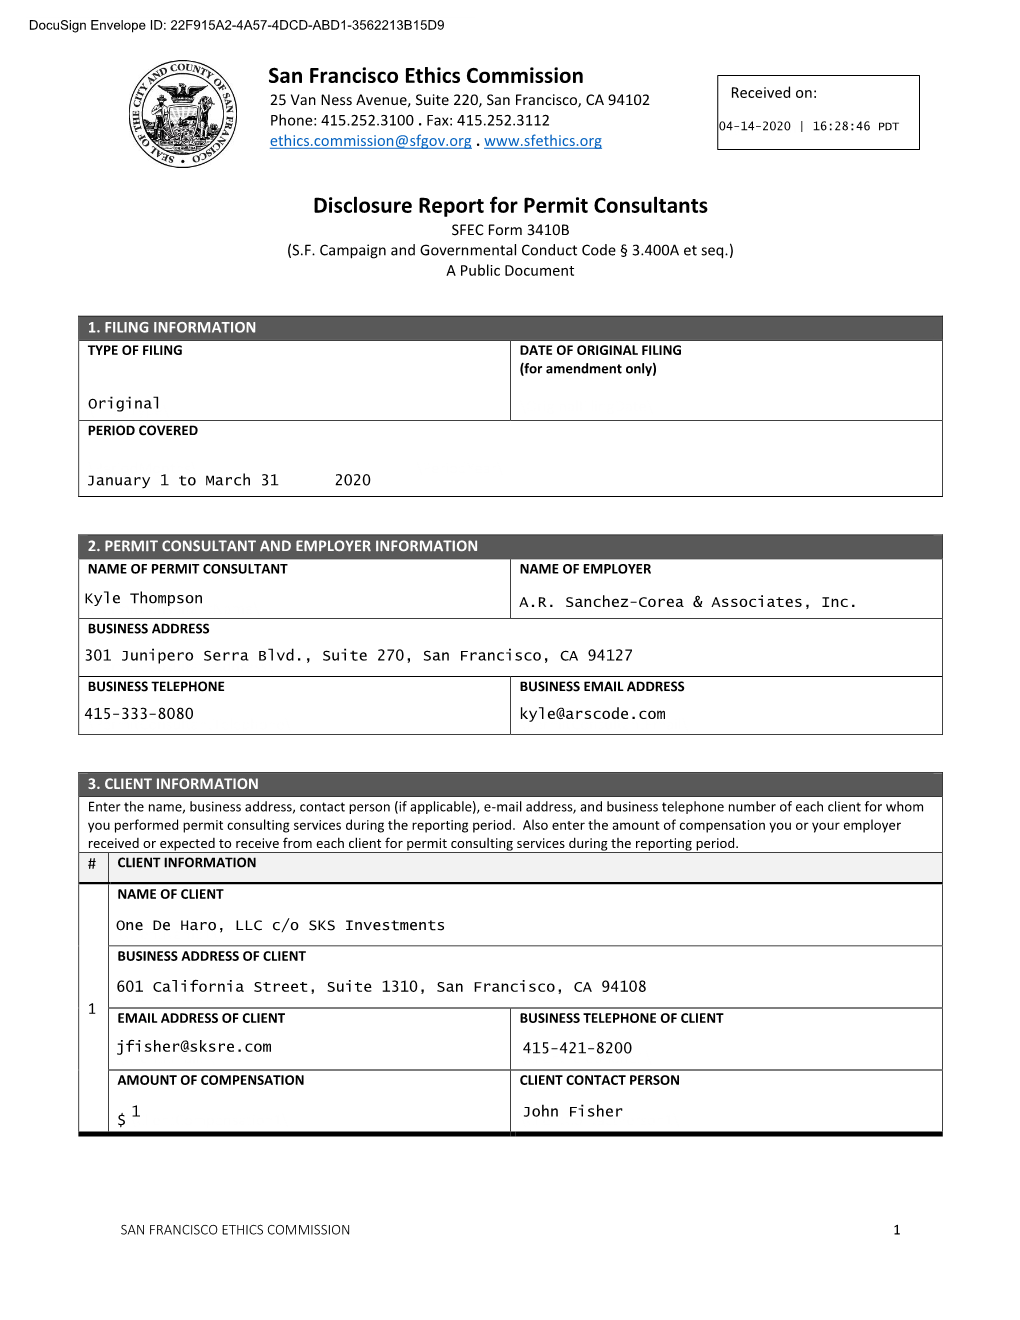 San Francisco Ethics Commission Disclosure Report for Permit